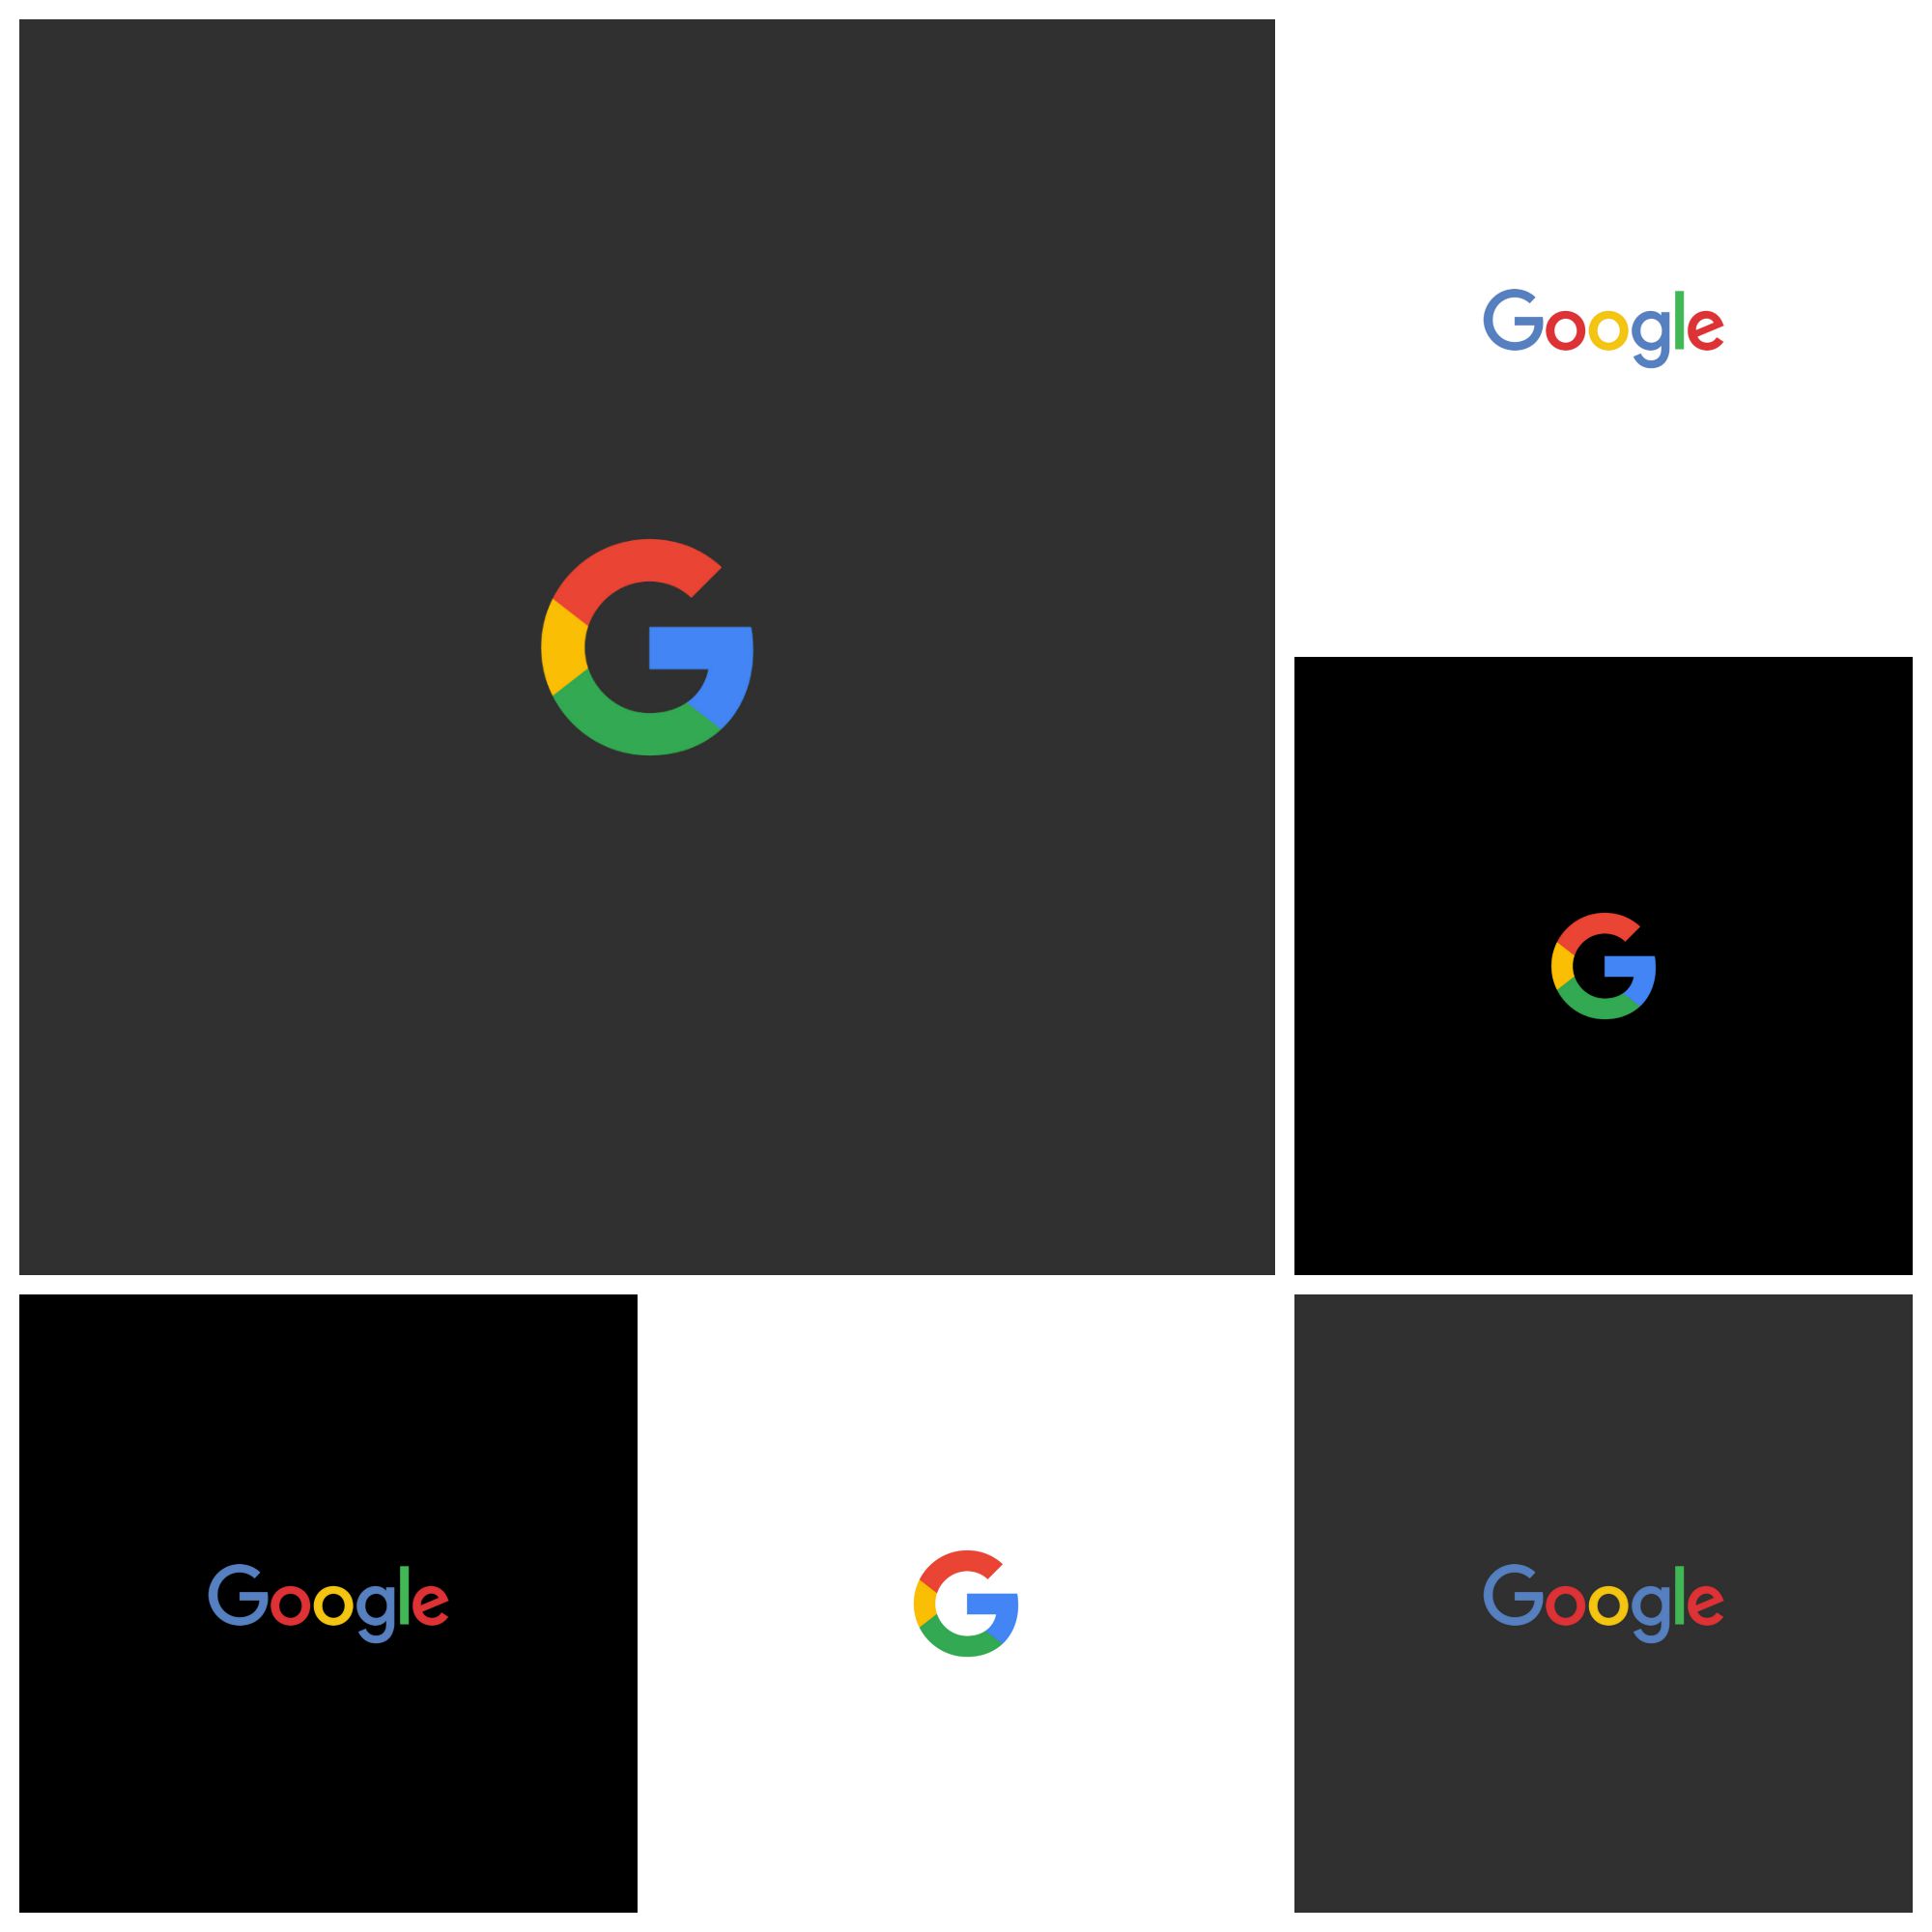 4k Google Wallpapers (NEW LOGO) by shanewignall on DeviantArt